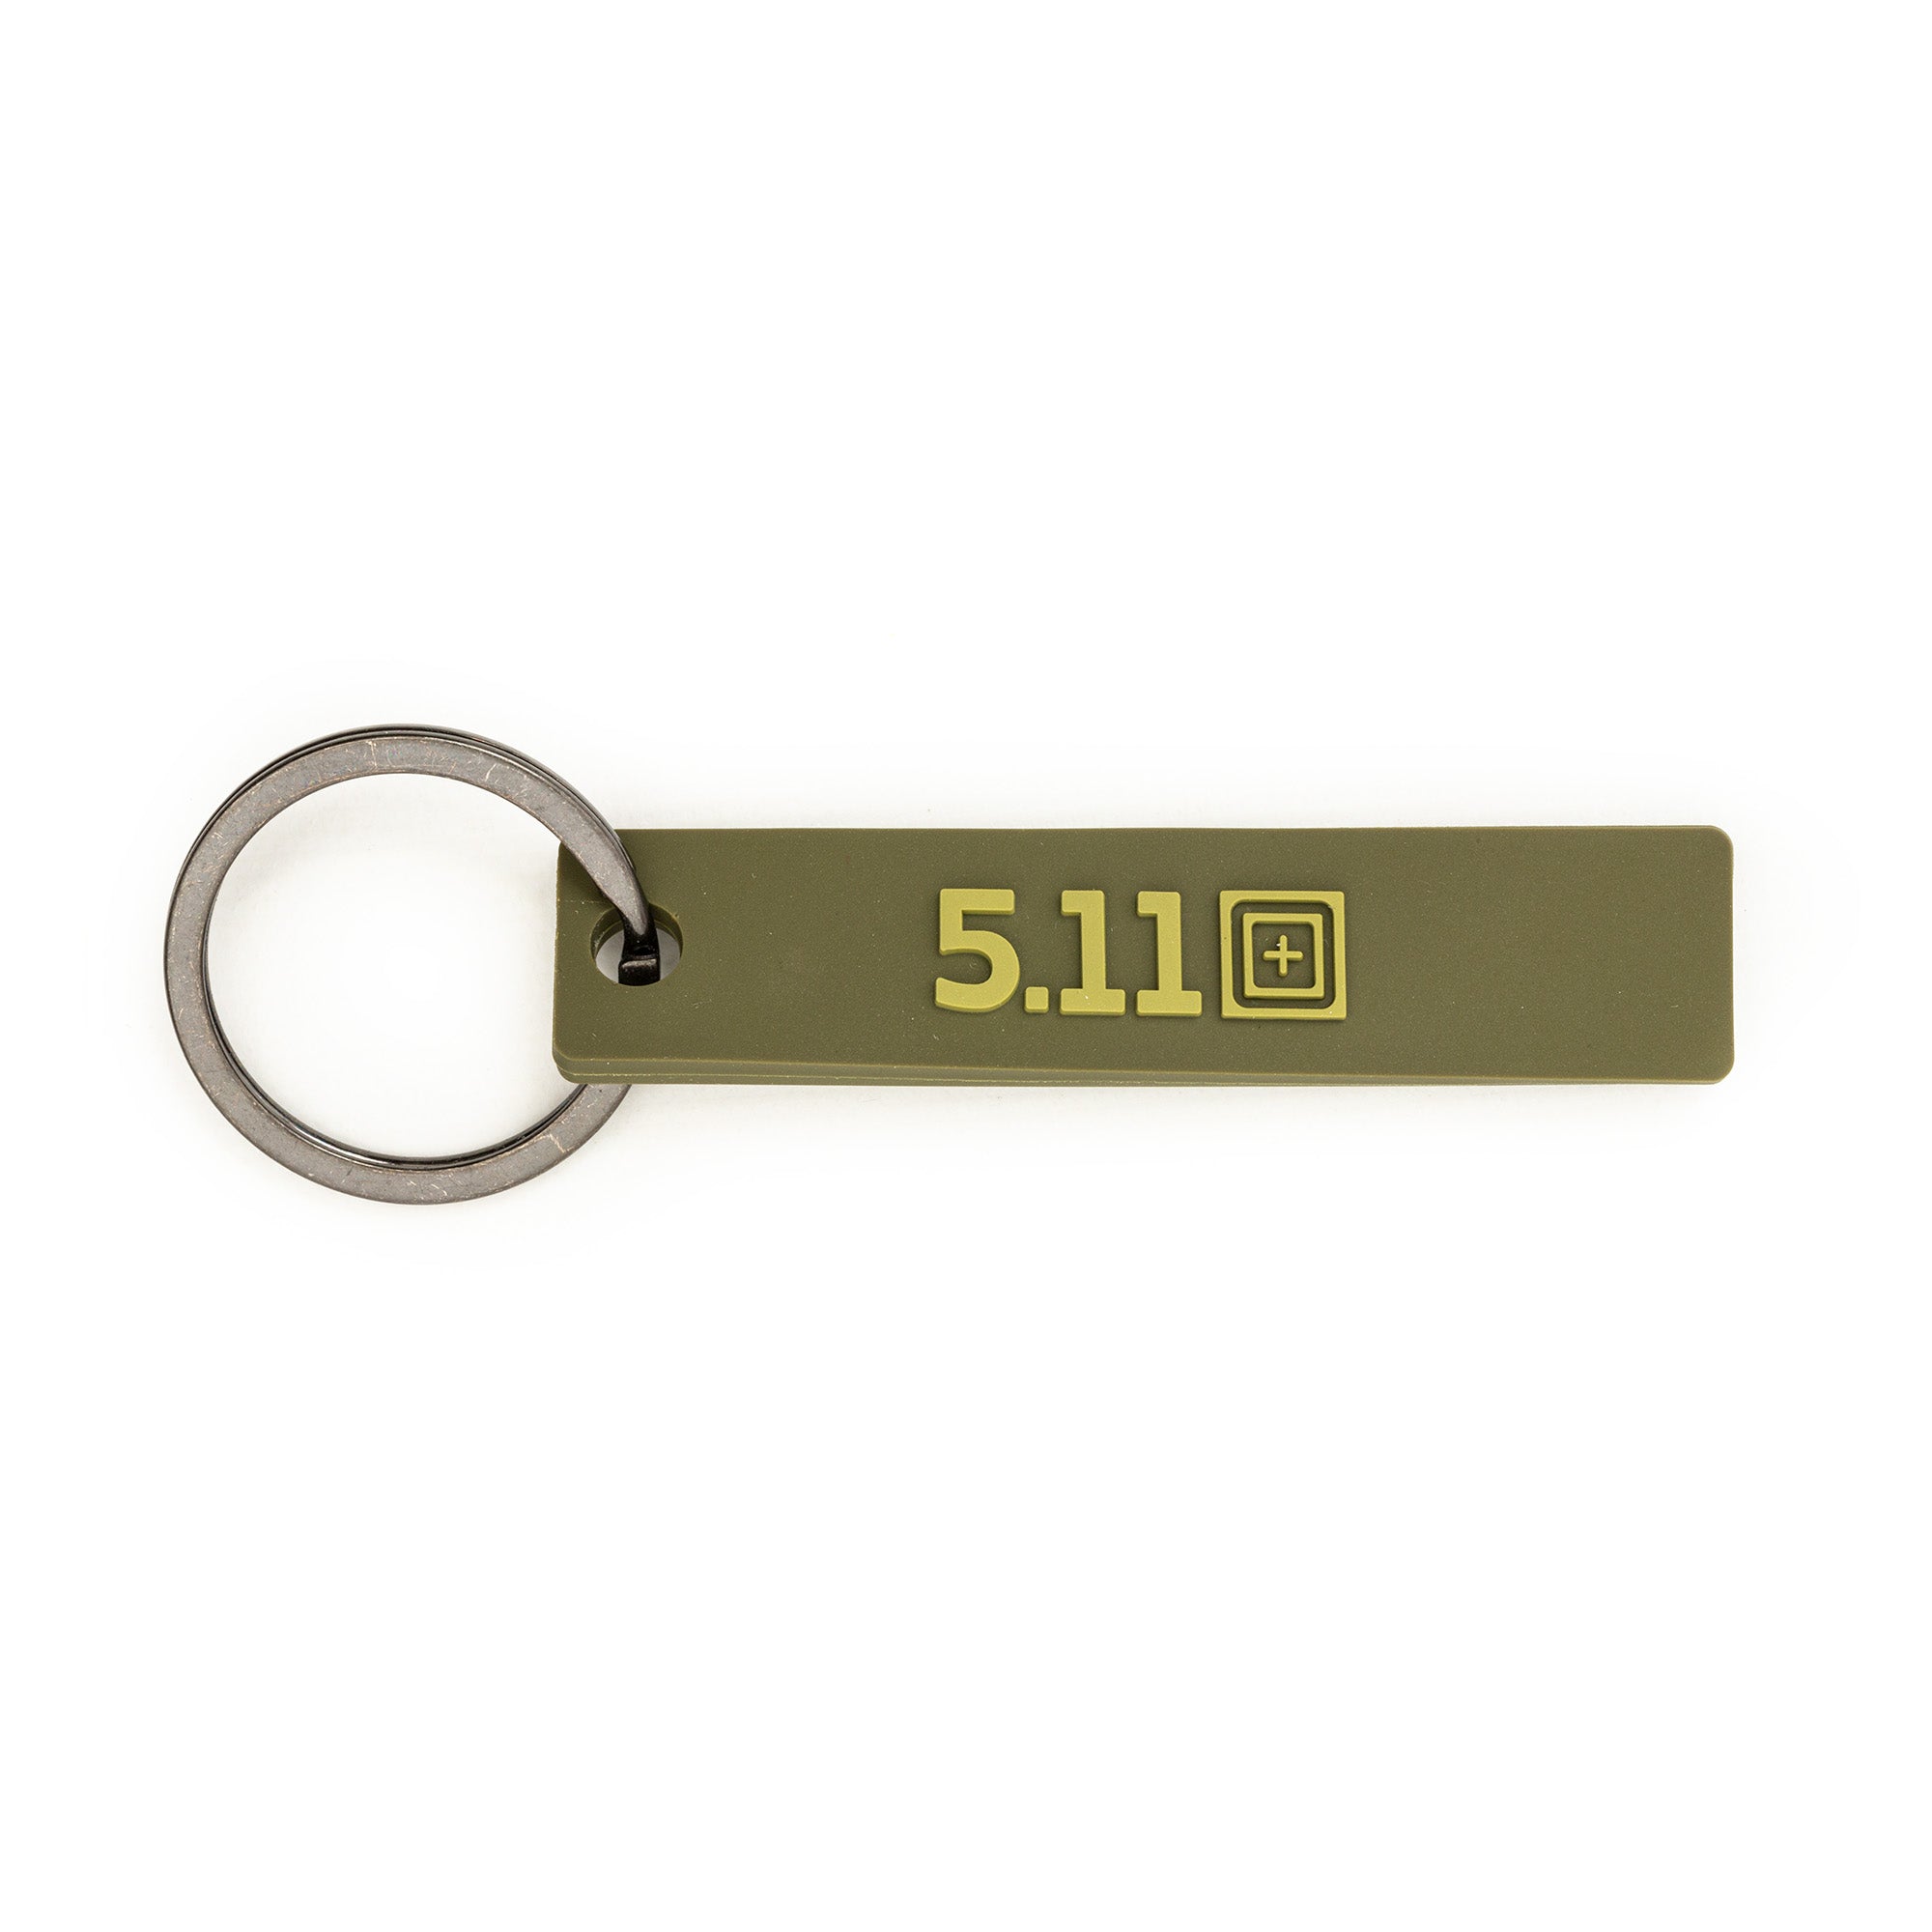 5.11 Tactical You'll Survive Keychain Tactical Gear Australia Supplier Distributor Dealer